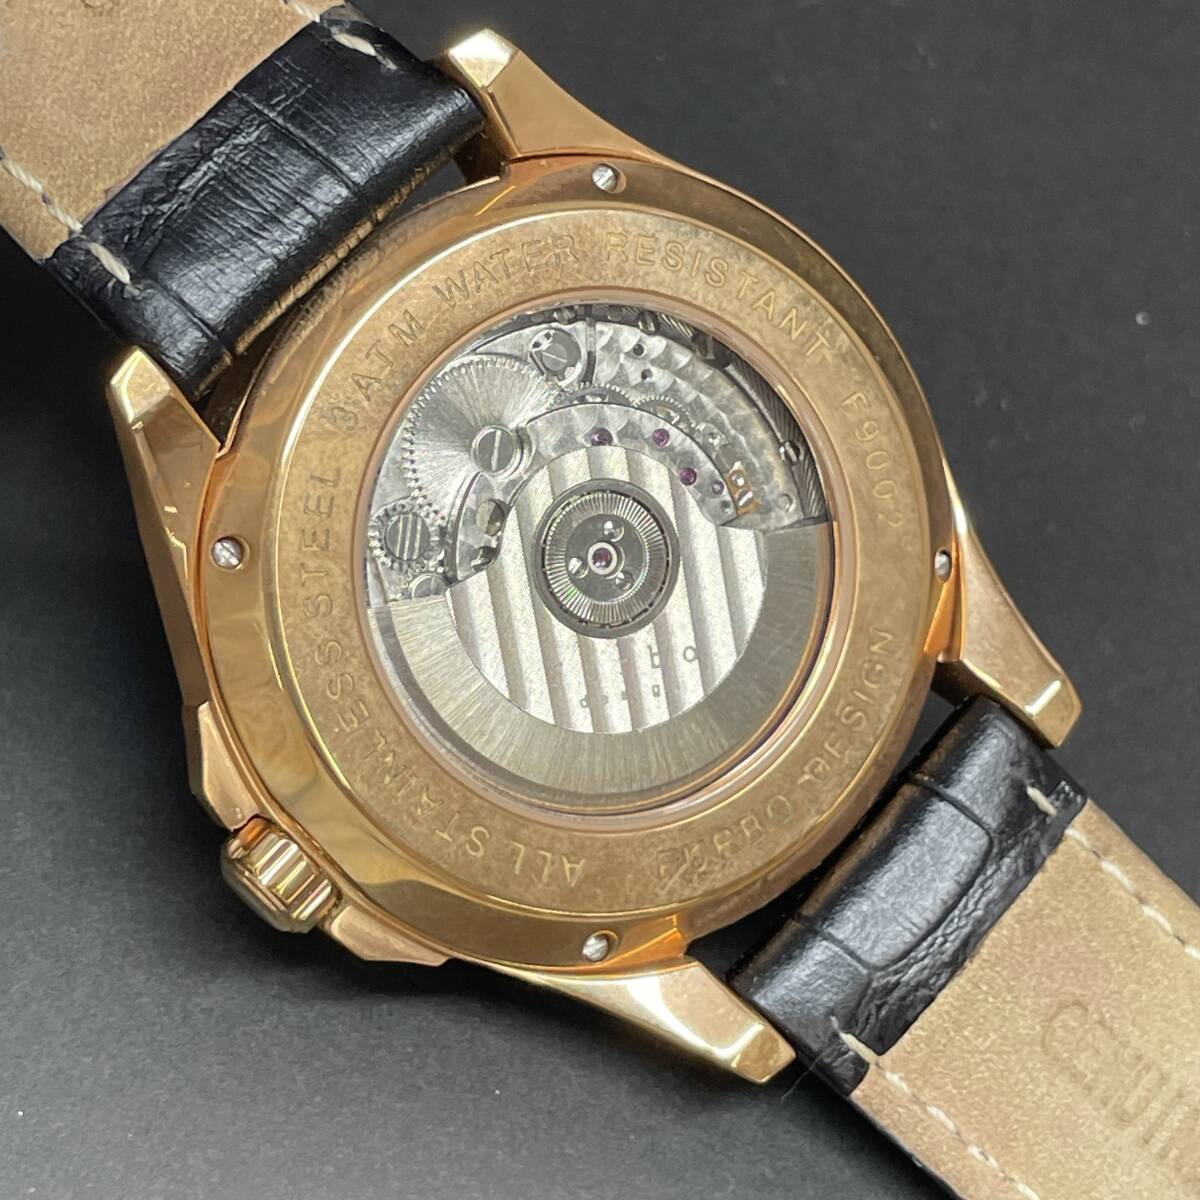 24C082 fulvic design Furbodesign F9002 self-winding watch AT AT reverse side ske leather leather belt men's wristwatch black face 1 jpy ~